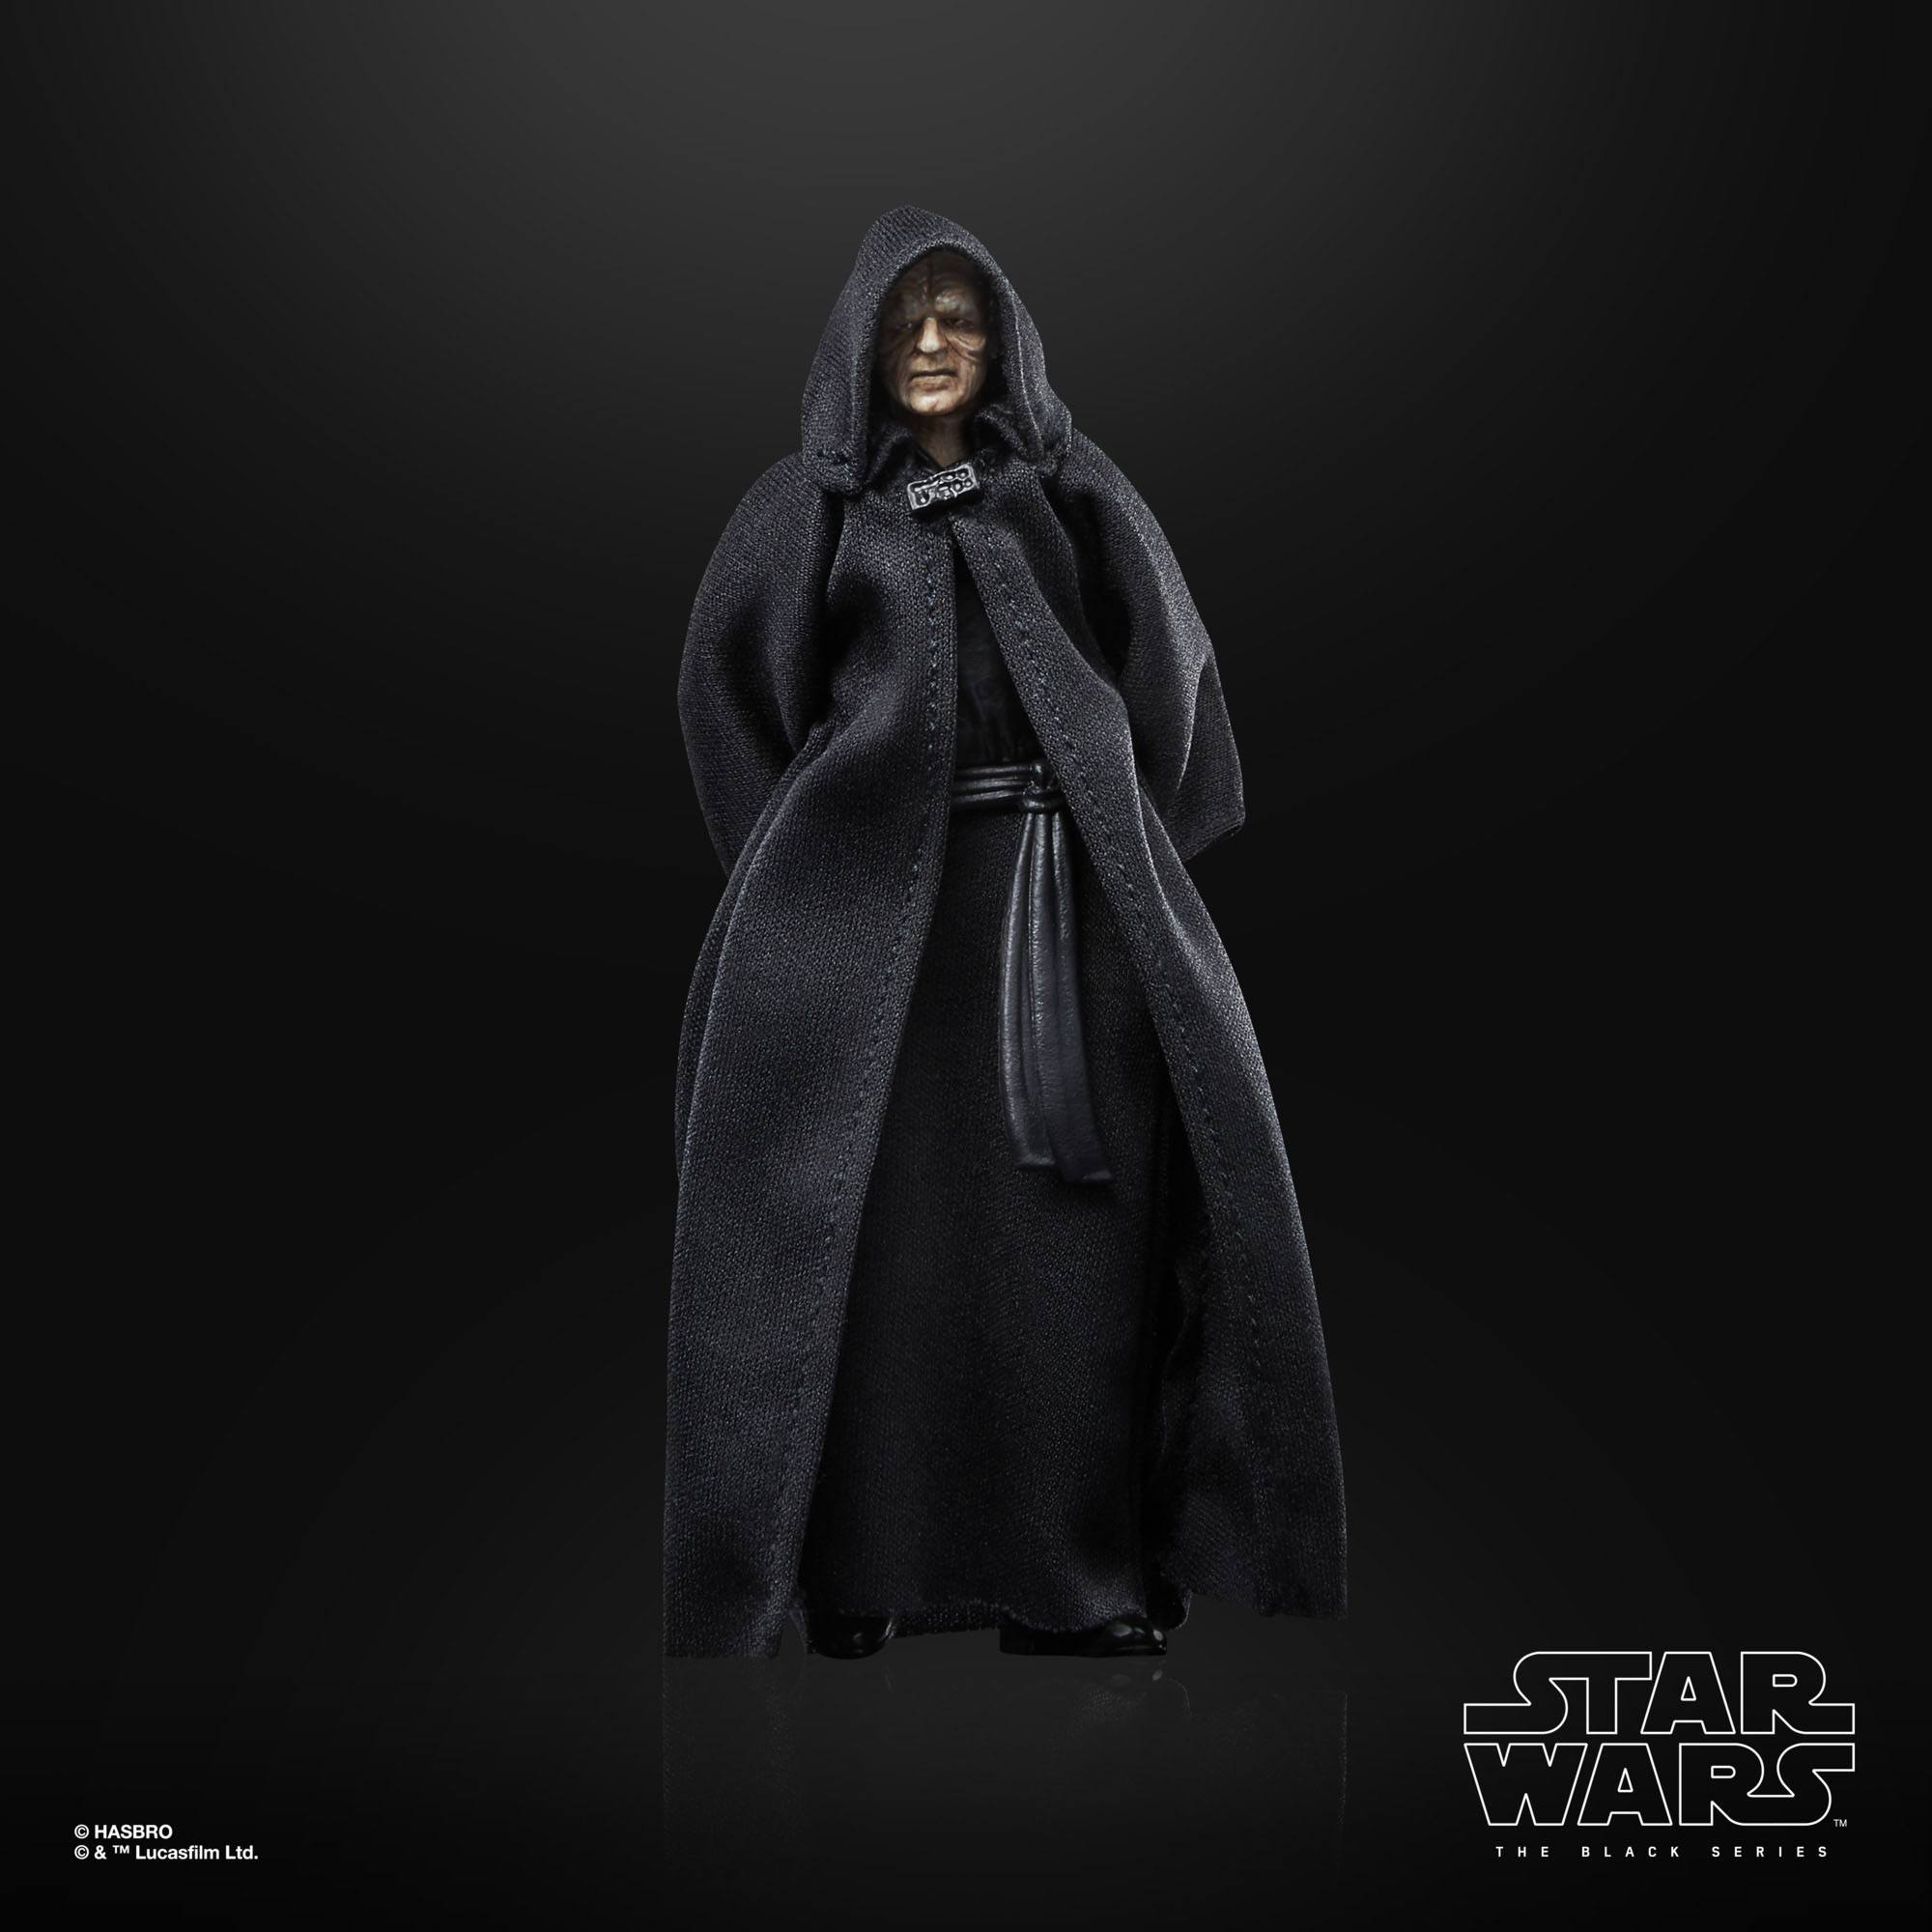 Star Wars Episode VI 40th Anniversary Black Series Actionfigur The Emperor 15 cm HASF7081 5010996135599